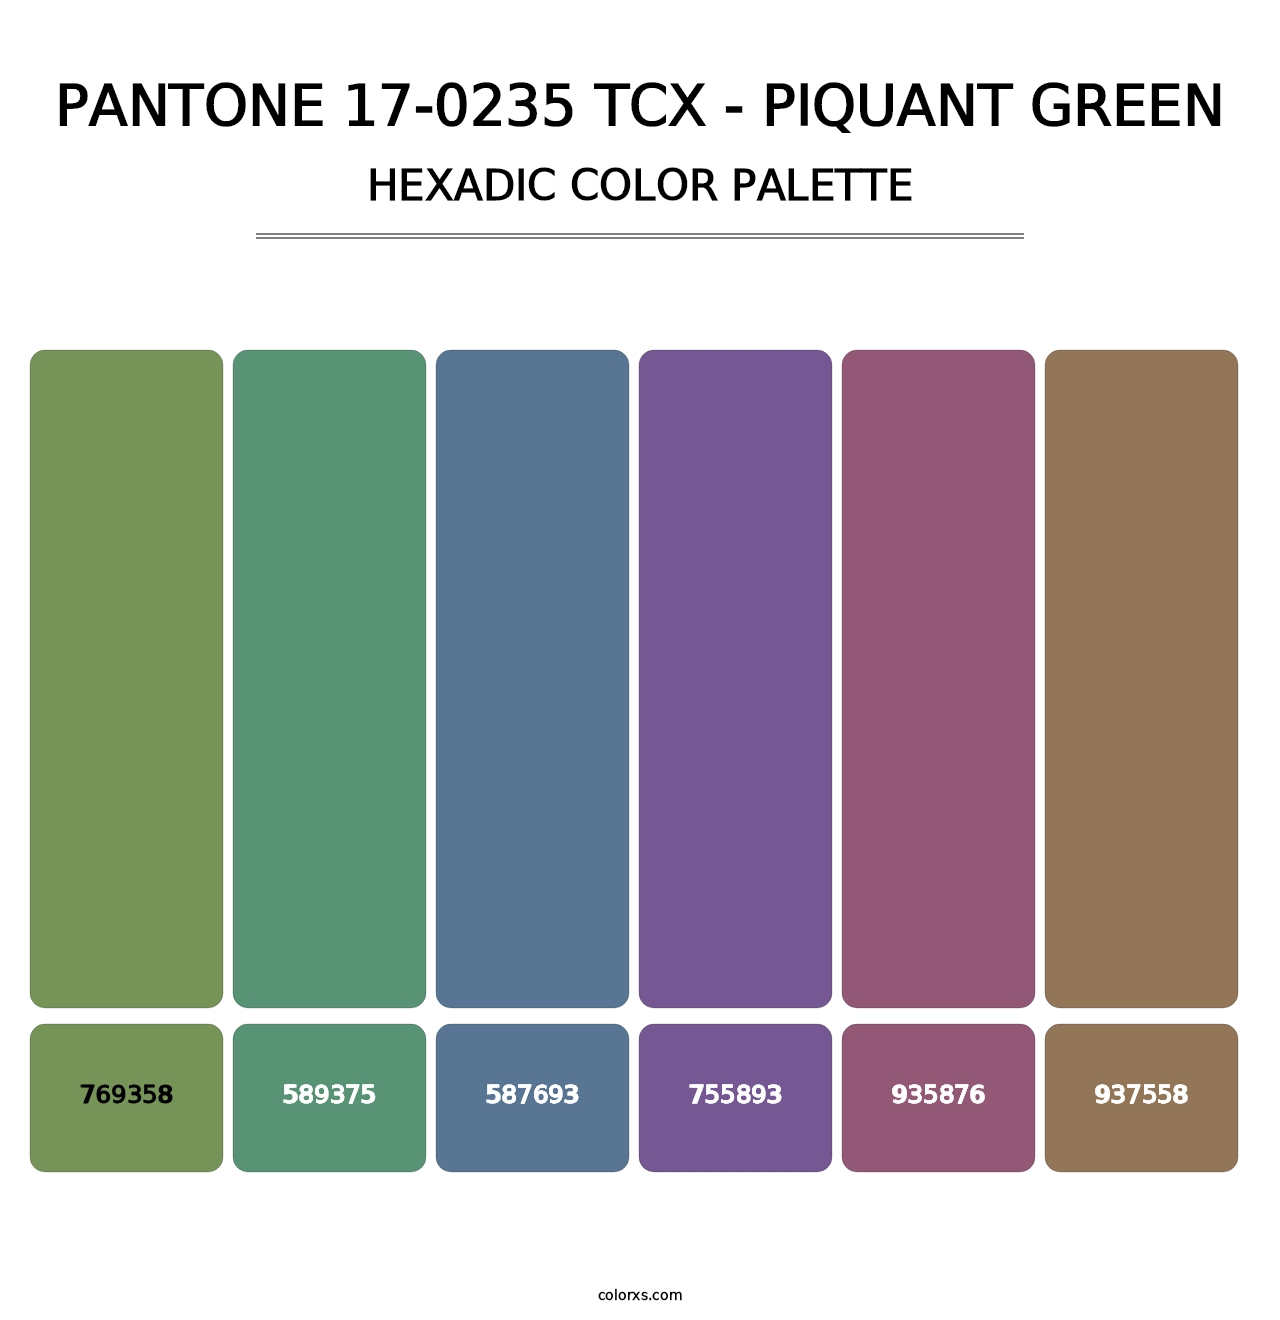 PANTONE 17-0235 TCX - Piquant Green - Hexadic Color Palette